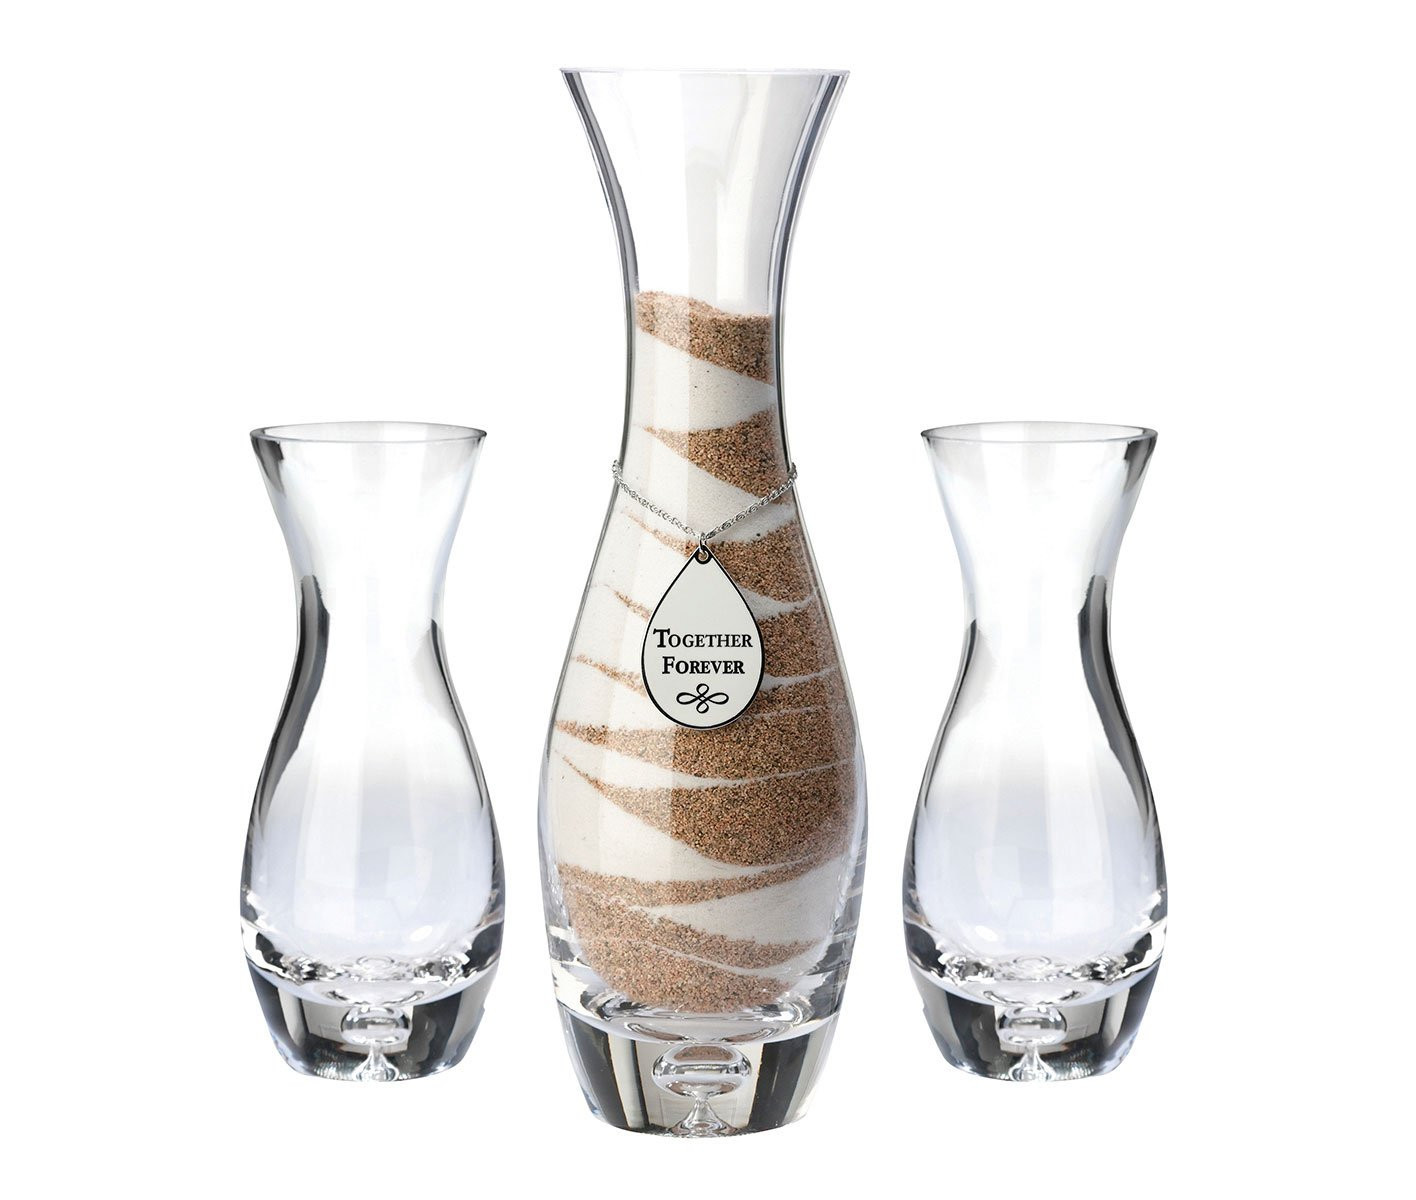 amber bubble glass vase of sand ceremony vase amazon com within lillian rose wedding ceremony unity sand vases together forever